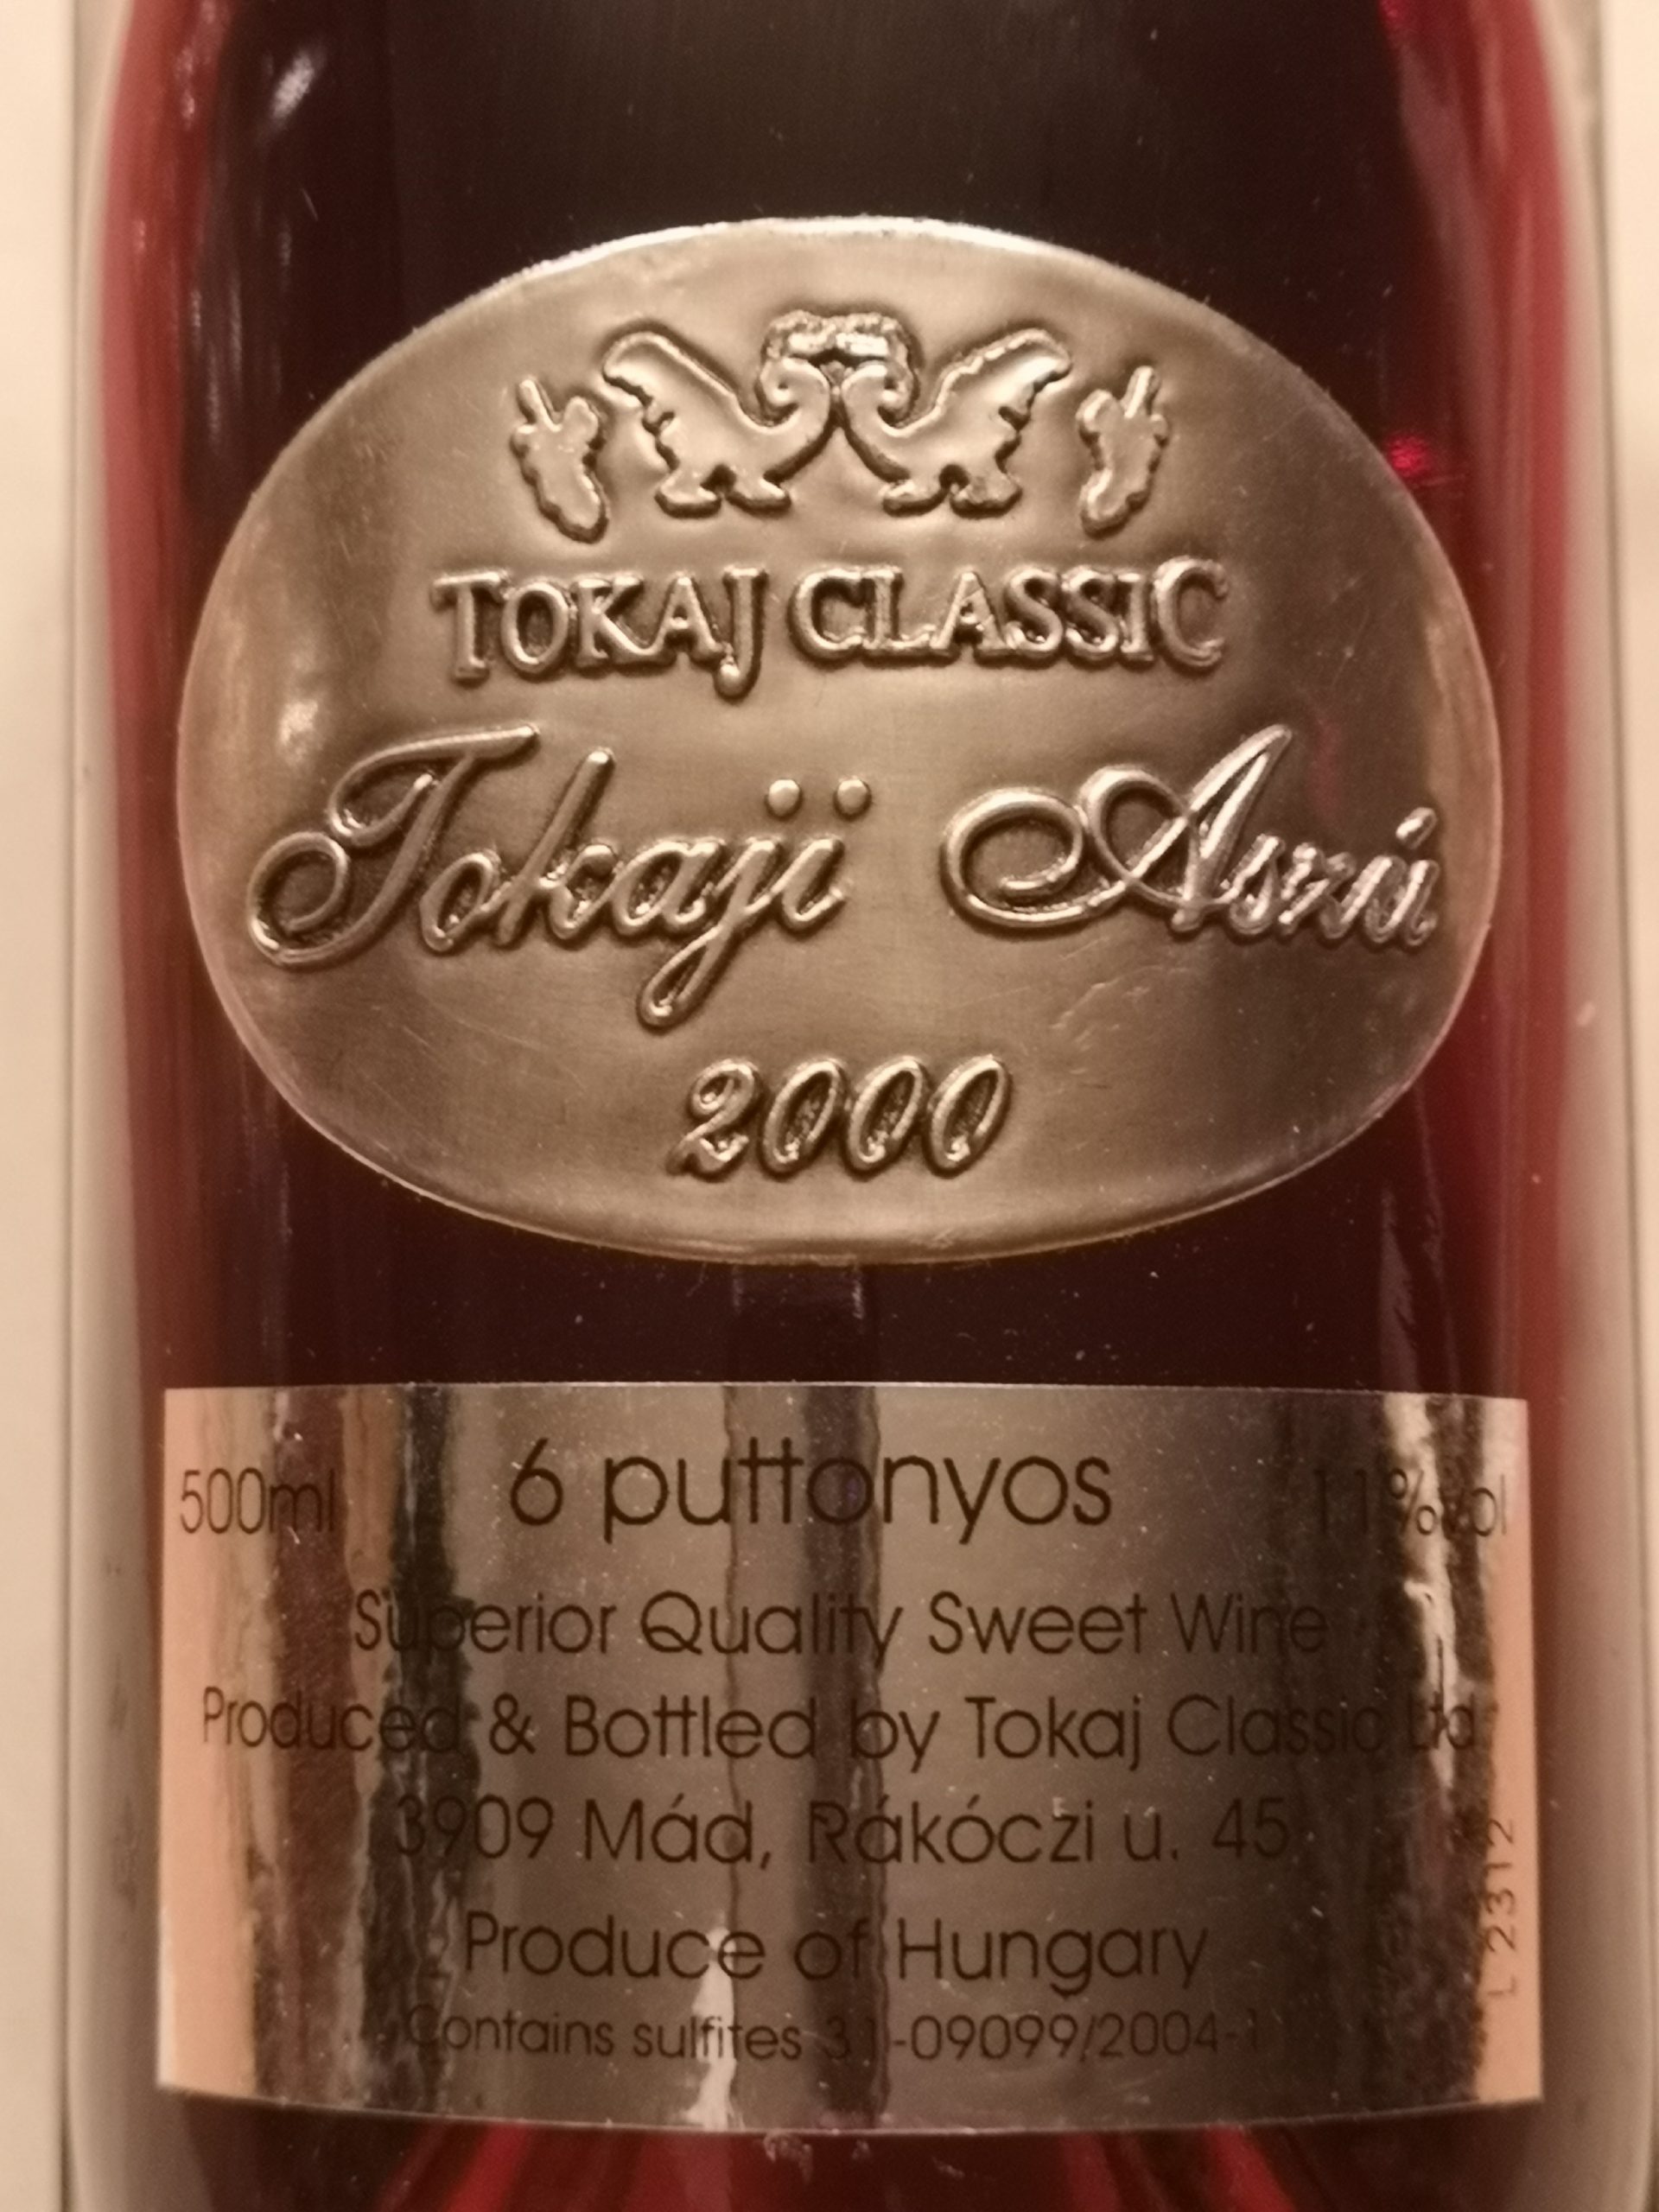 2000 Tokaji Aszú 6 Puttonyos | Tokaji Classic Winery